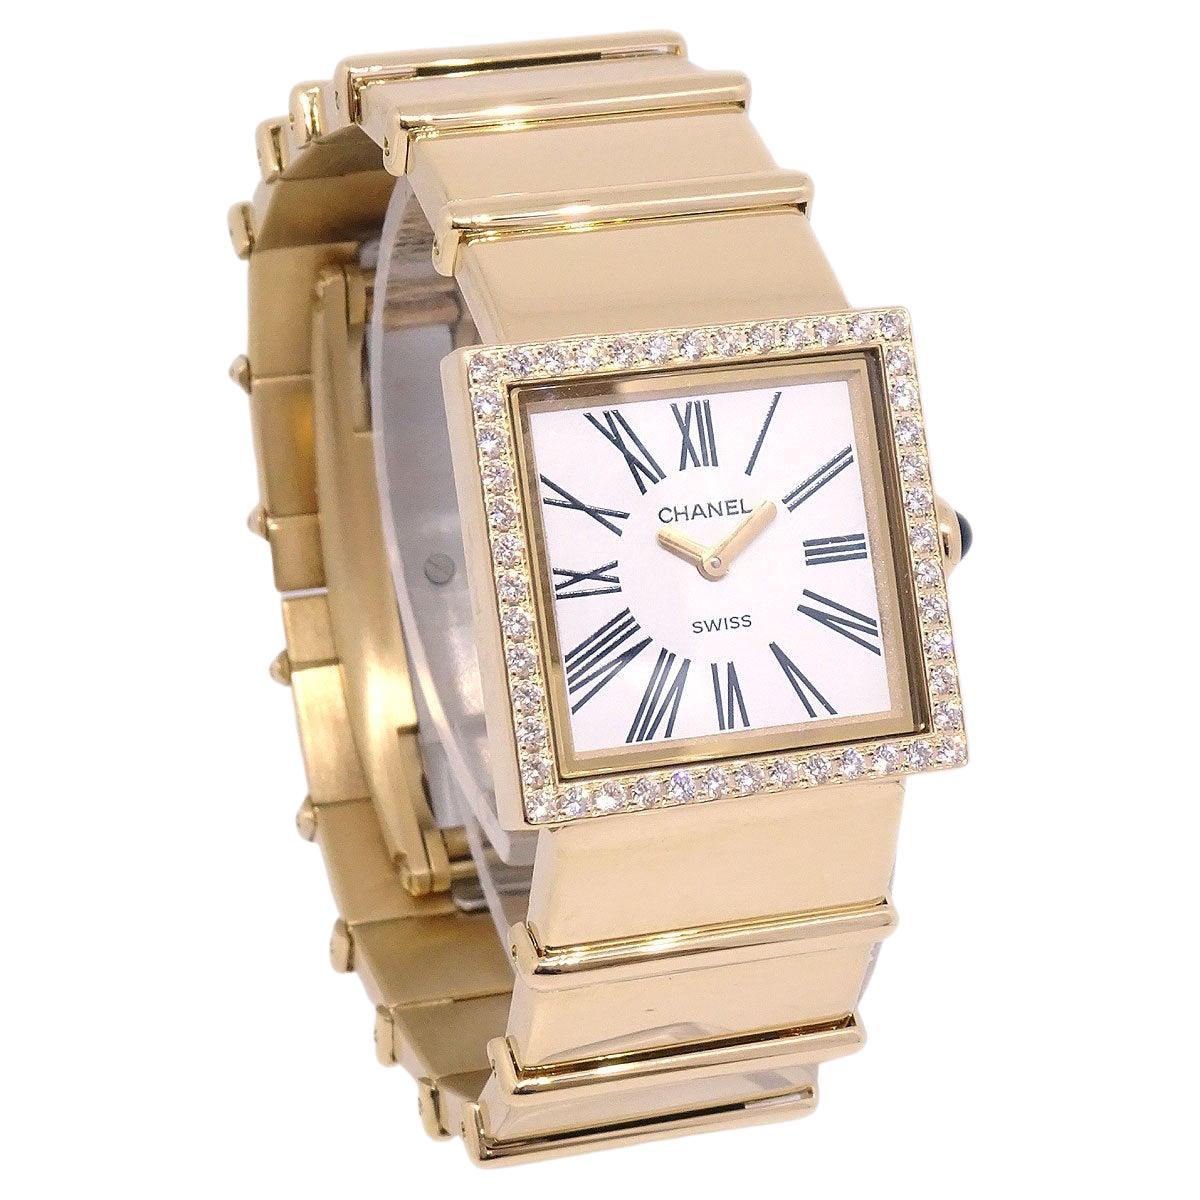 CHANEL 18K Yellow Gold Link Diamond Accent Mademoiselle Wrist Watch